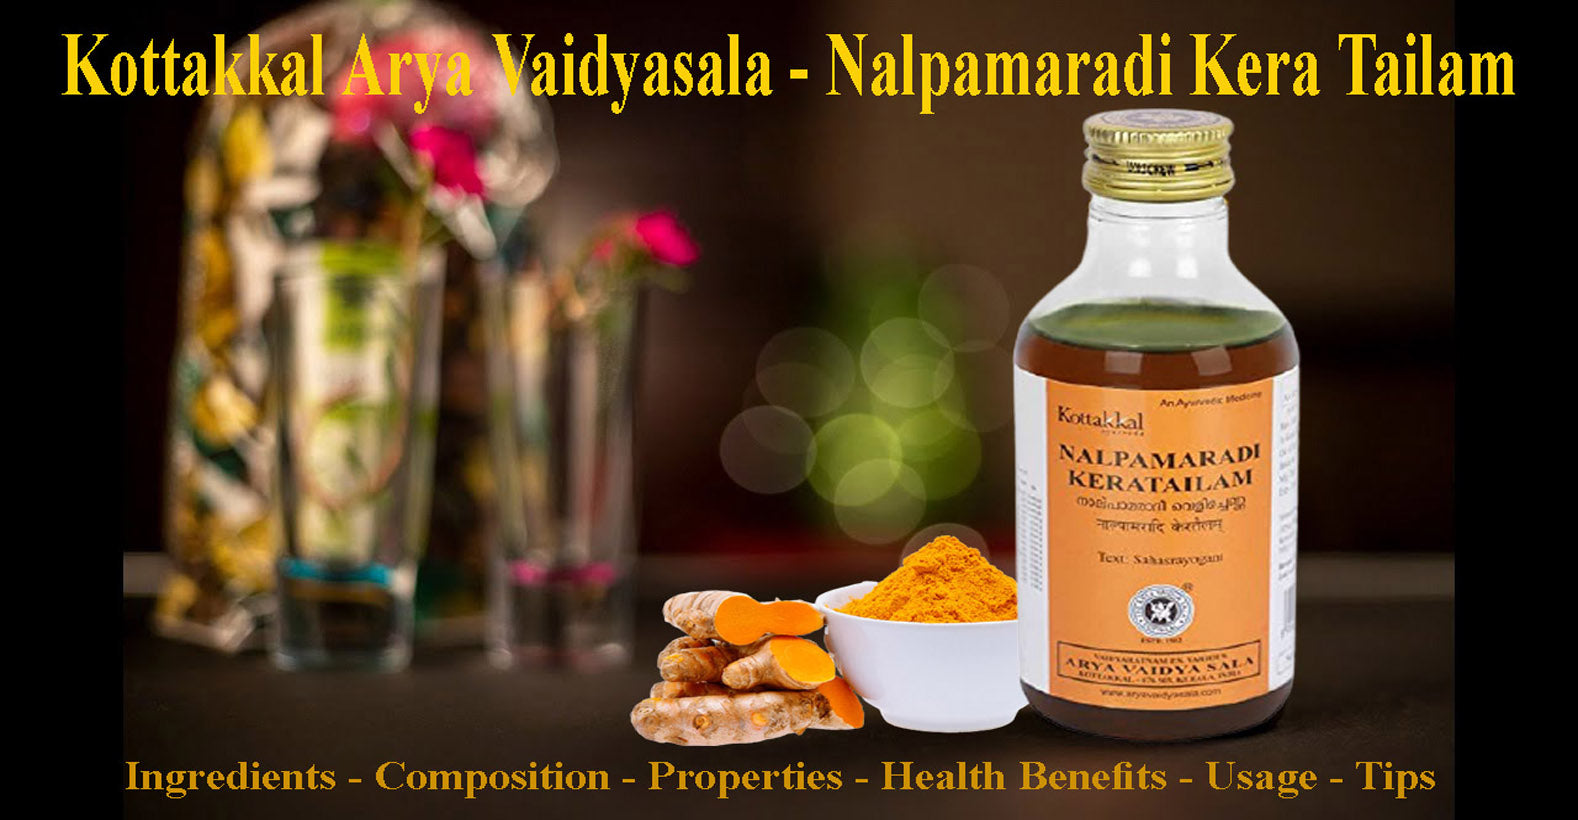 Kottakkal Arya Vaidyasala Nalpamaradi Kera Tailam - Ingredients, Composition, Properties, Health Benefits, Usage, Tips